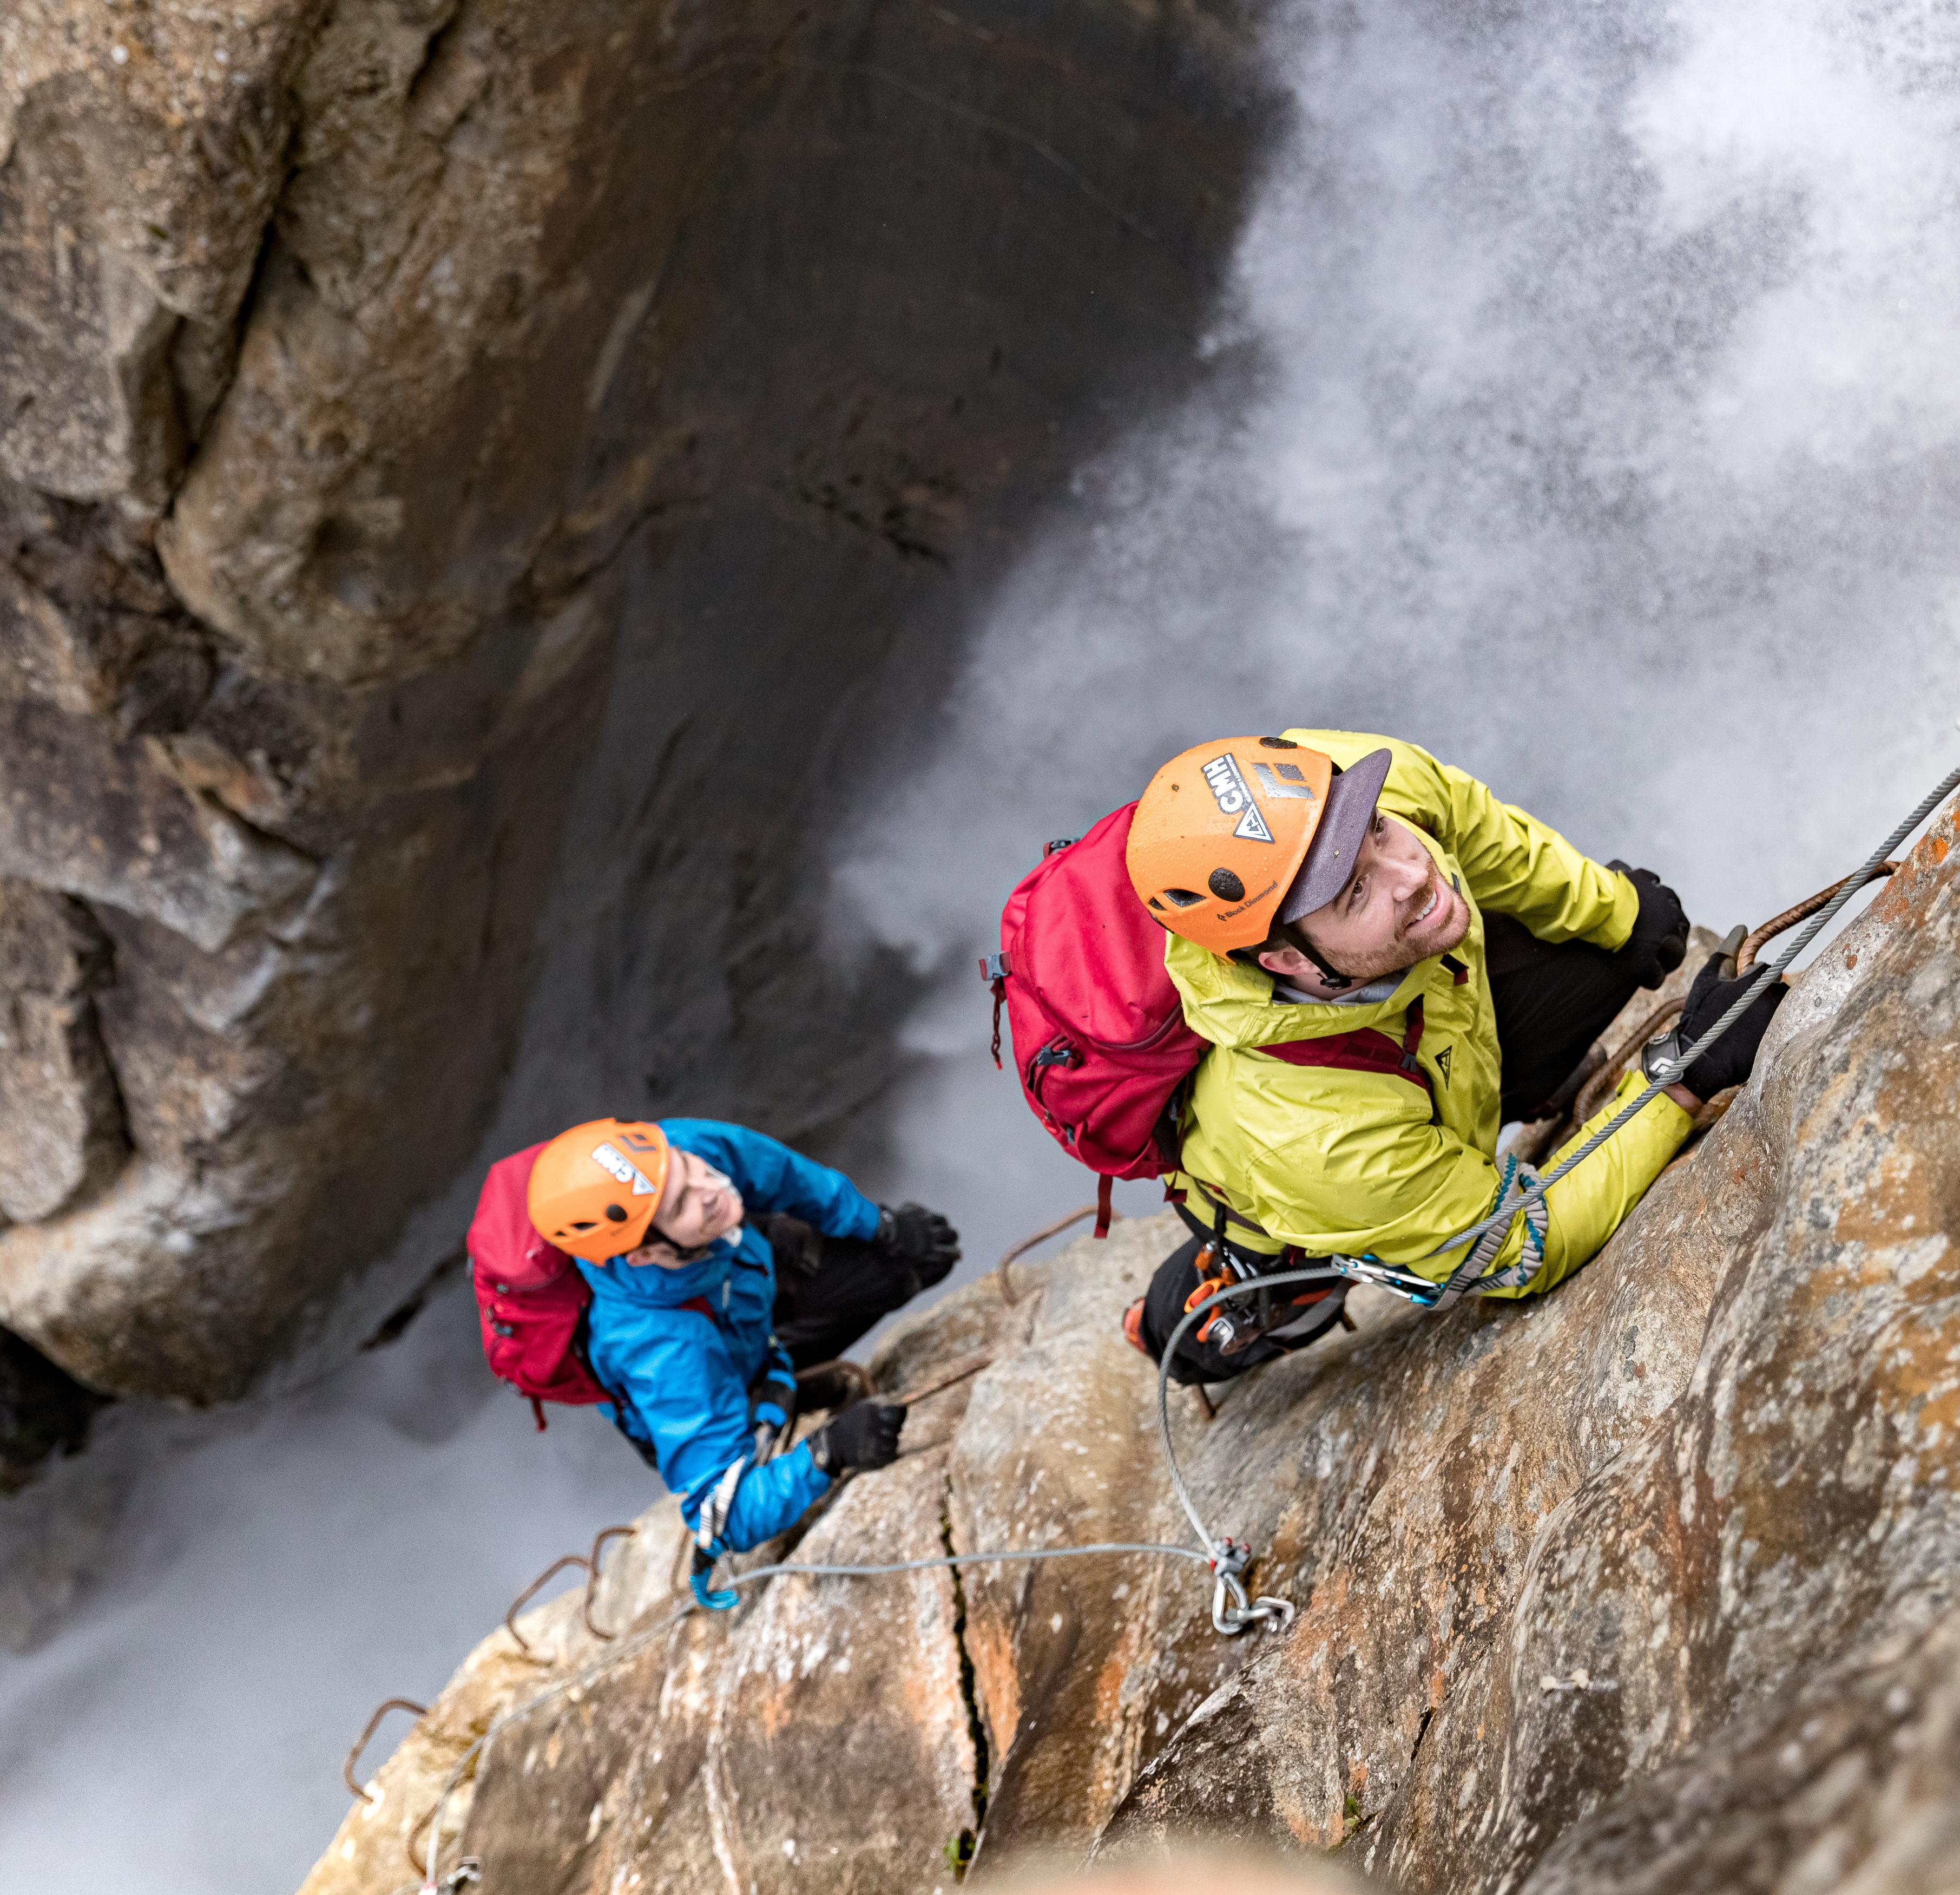 Two people climbing alongside a waterfall